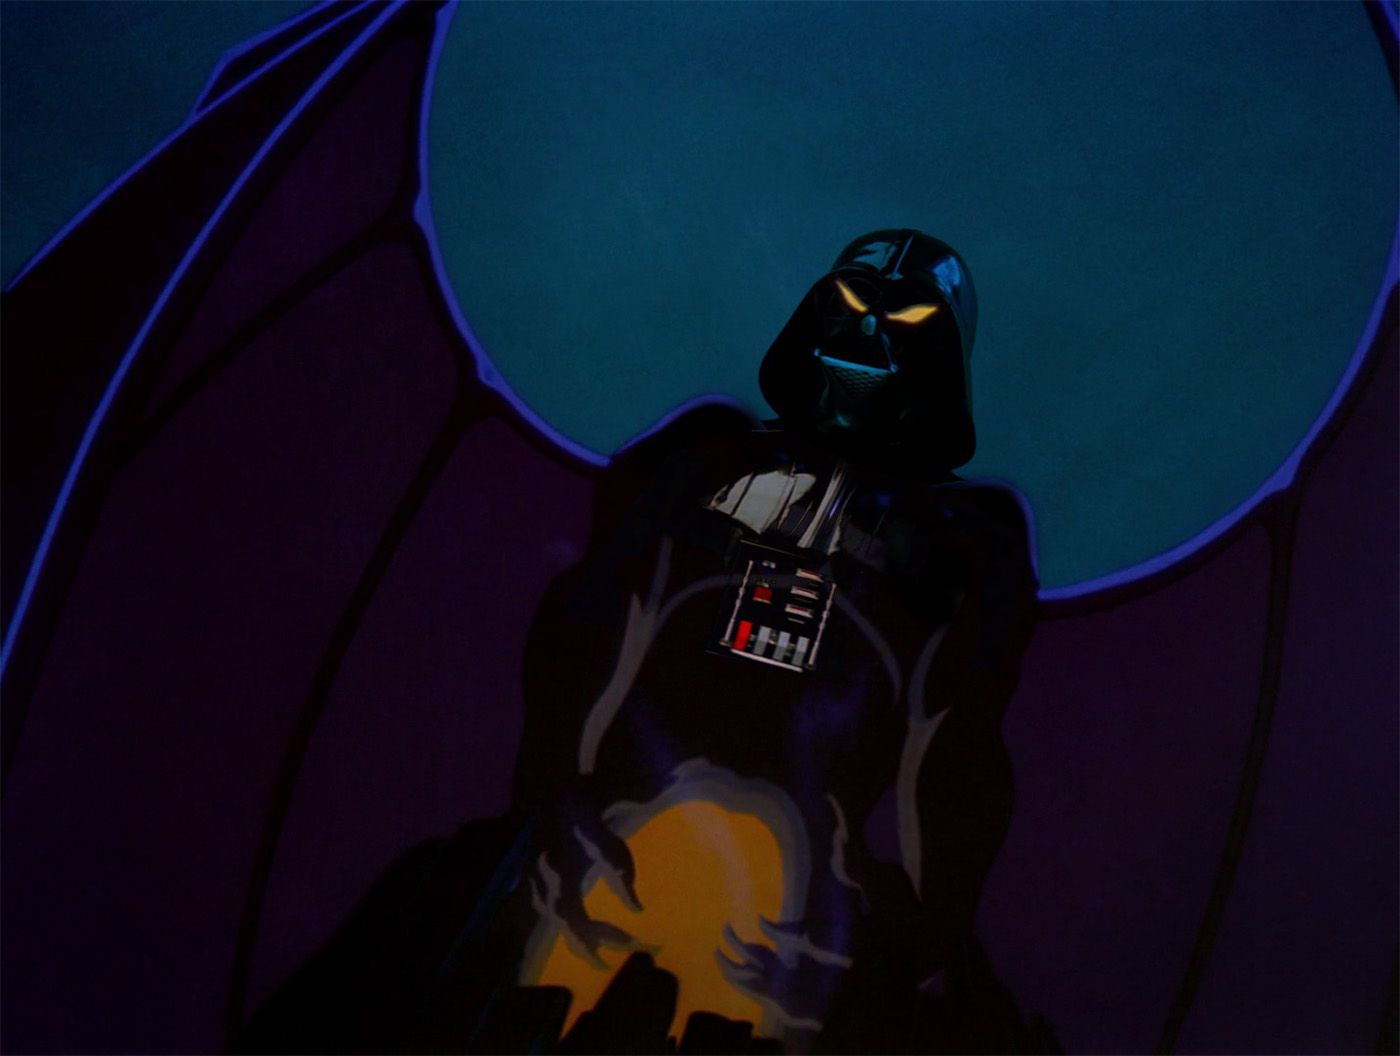 Chernabog as Darth Vader